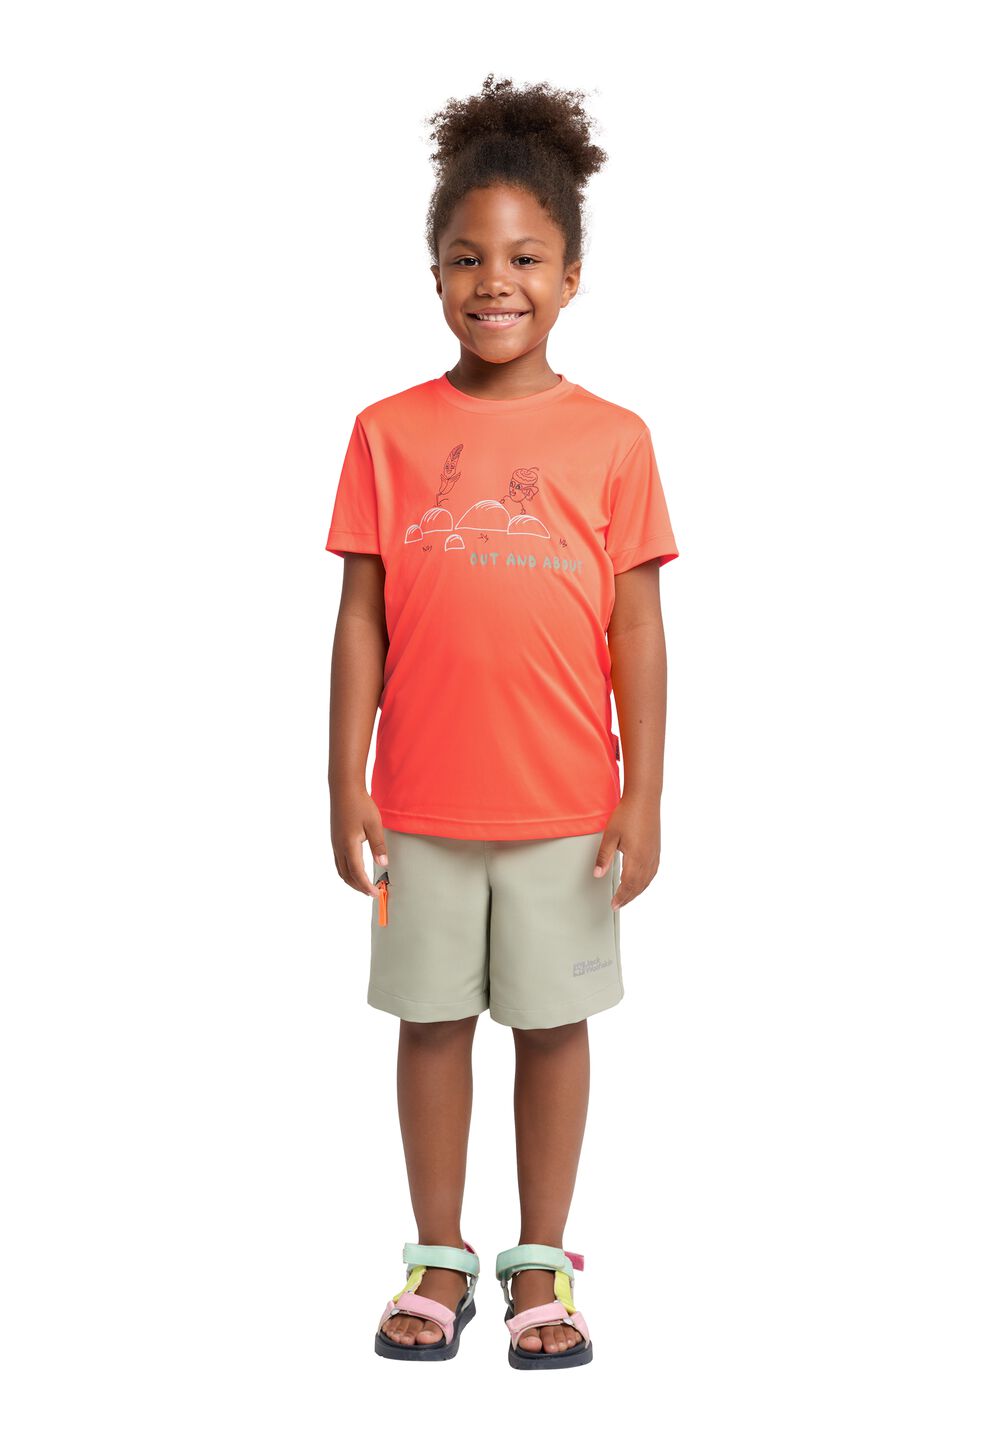 Jack Wolfskin OUT AND About T-Shirt Kids Functioneel shirt Kinderen 176 rood digital orange